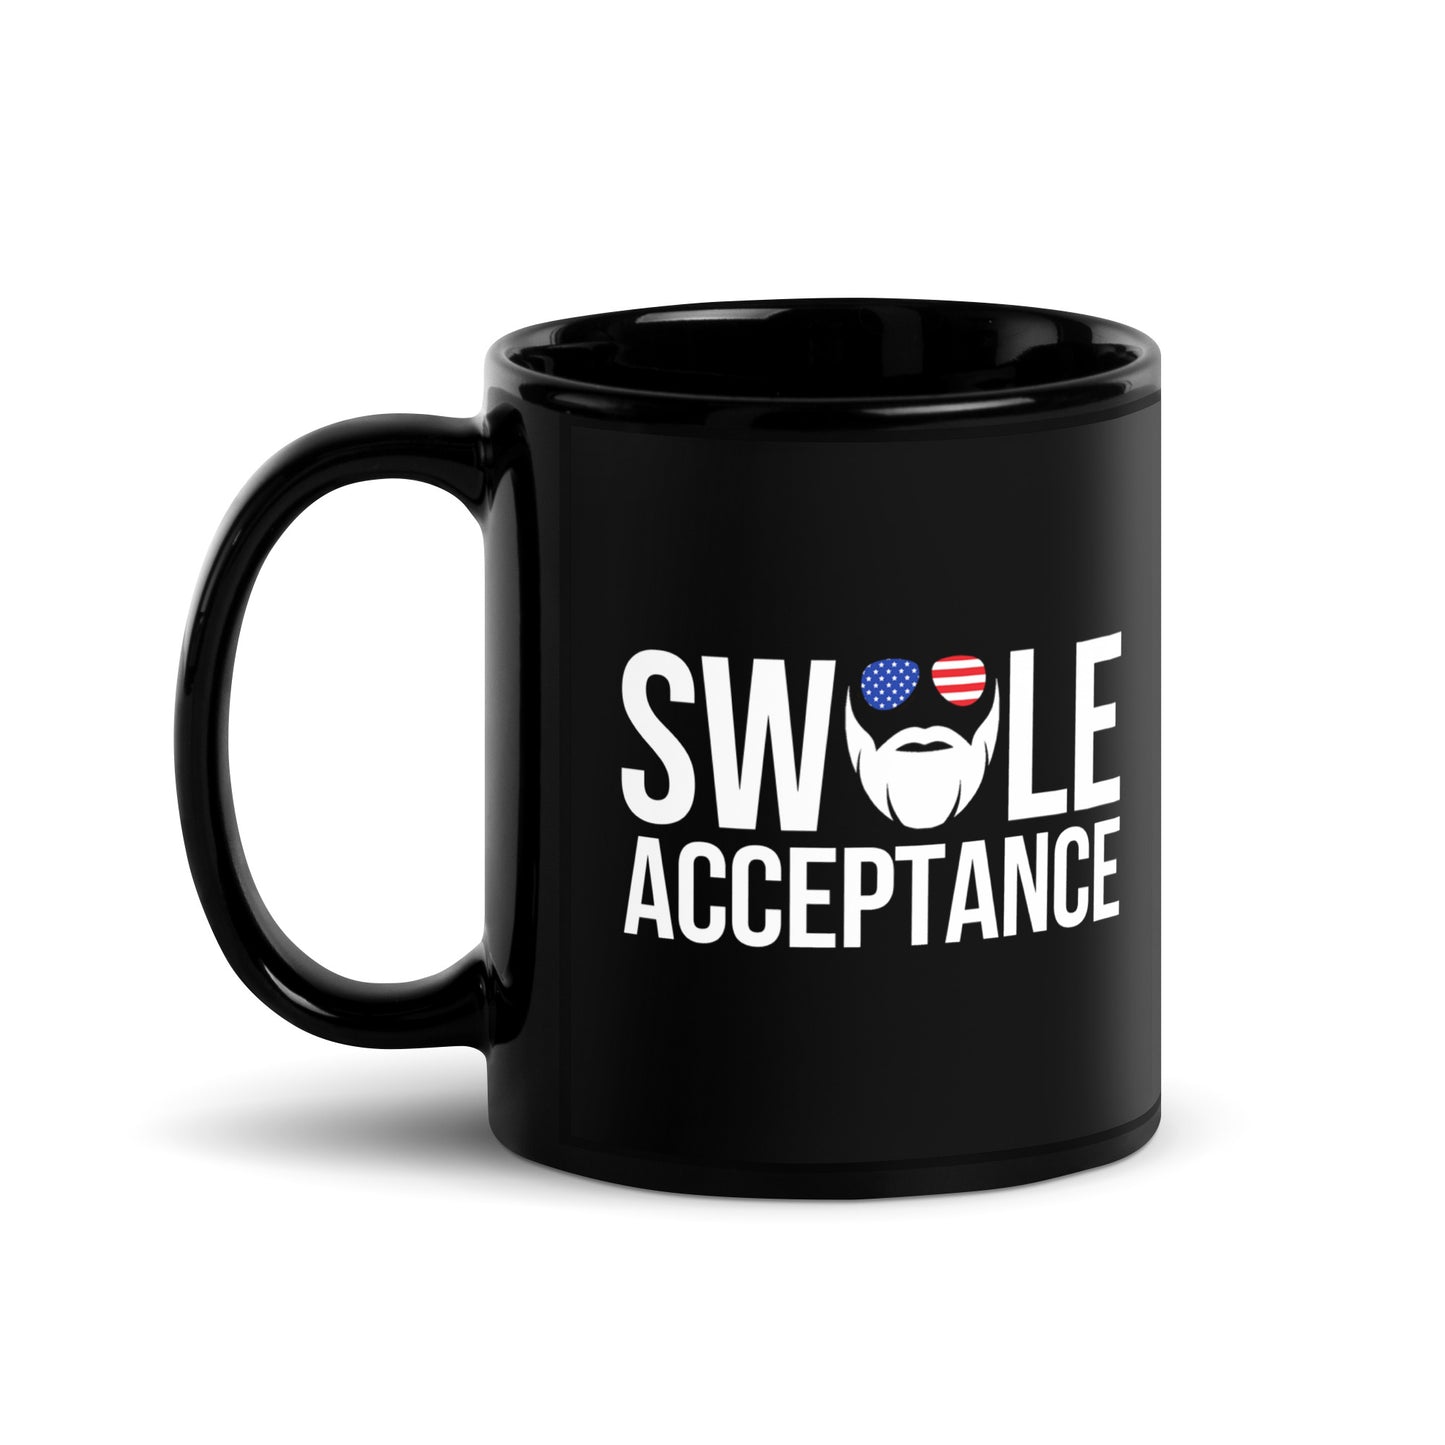 Swole Acceptance Mug